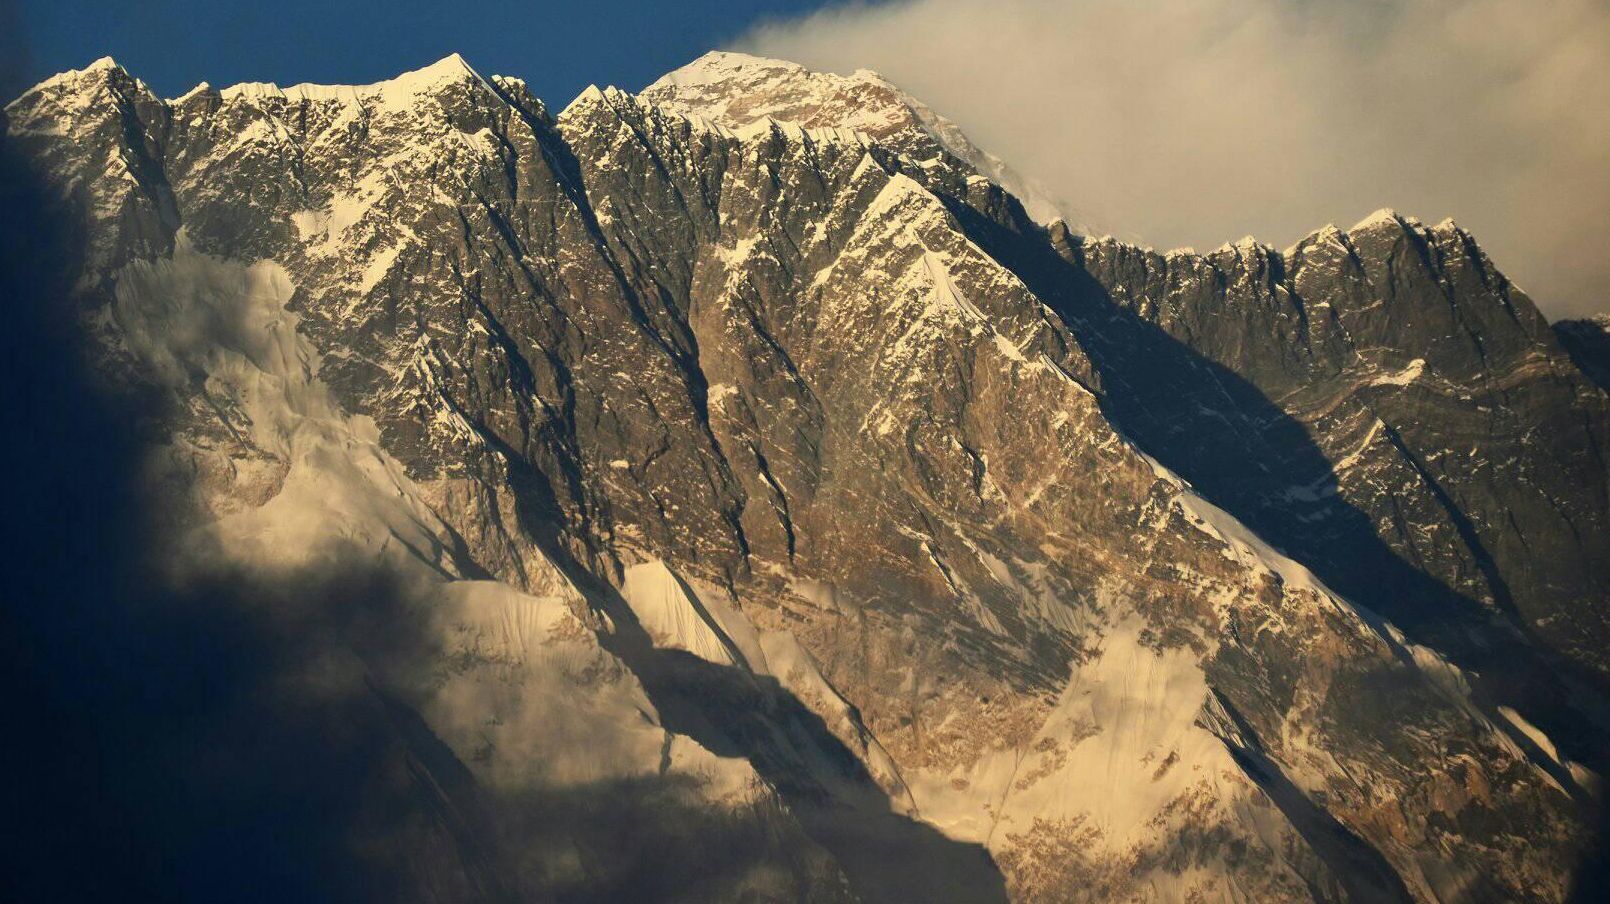 Nuptse - Lhotse Wall above the Imja Khosi Valley in the Khumbu region of the Nepal Himalaya